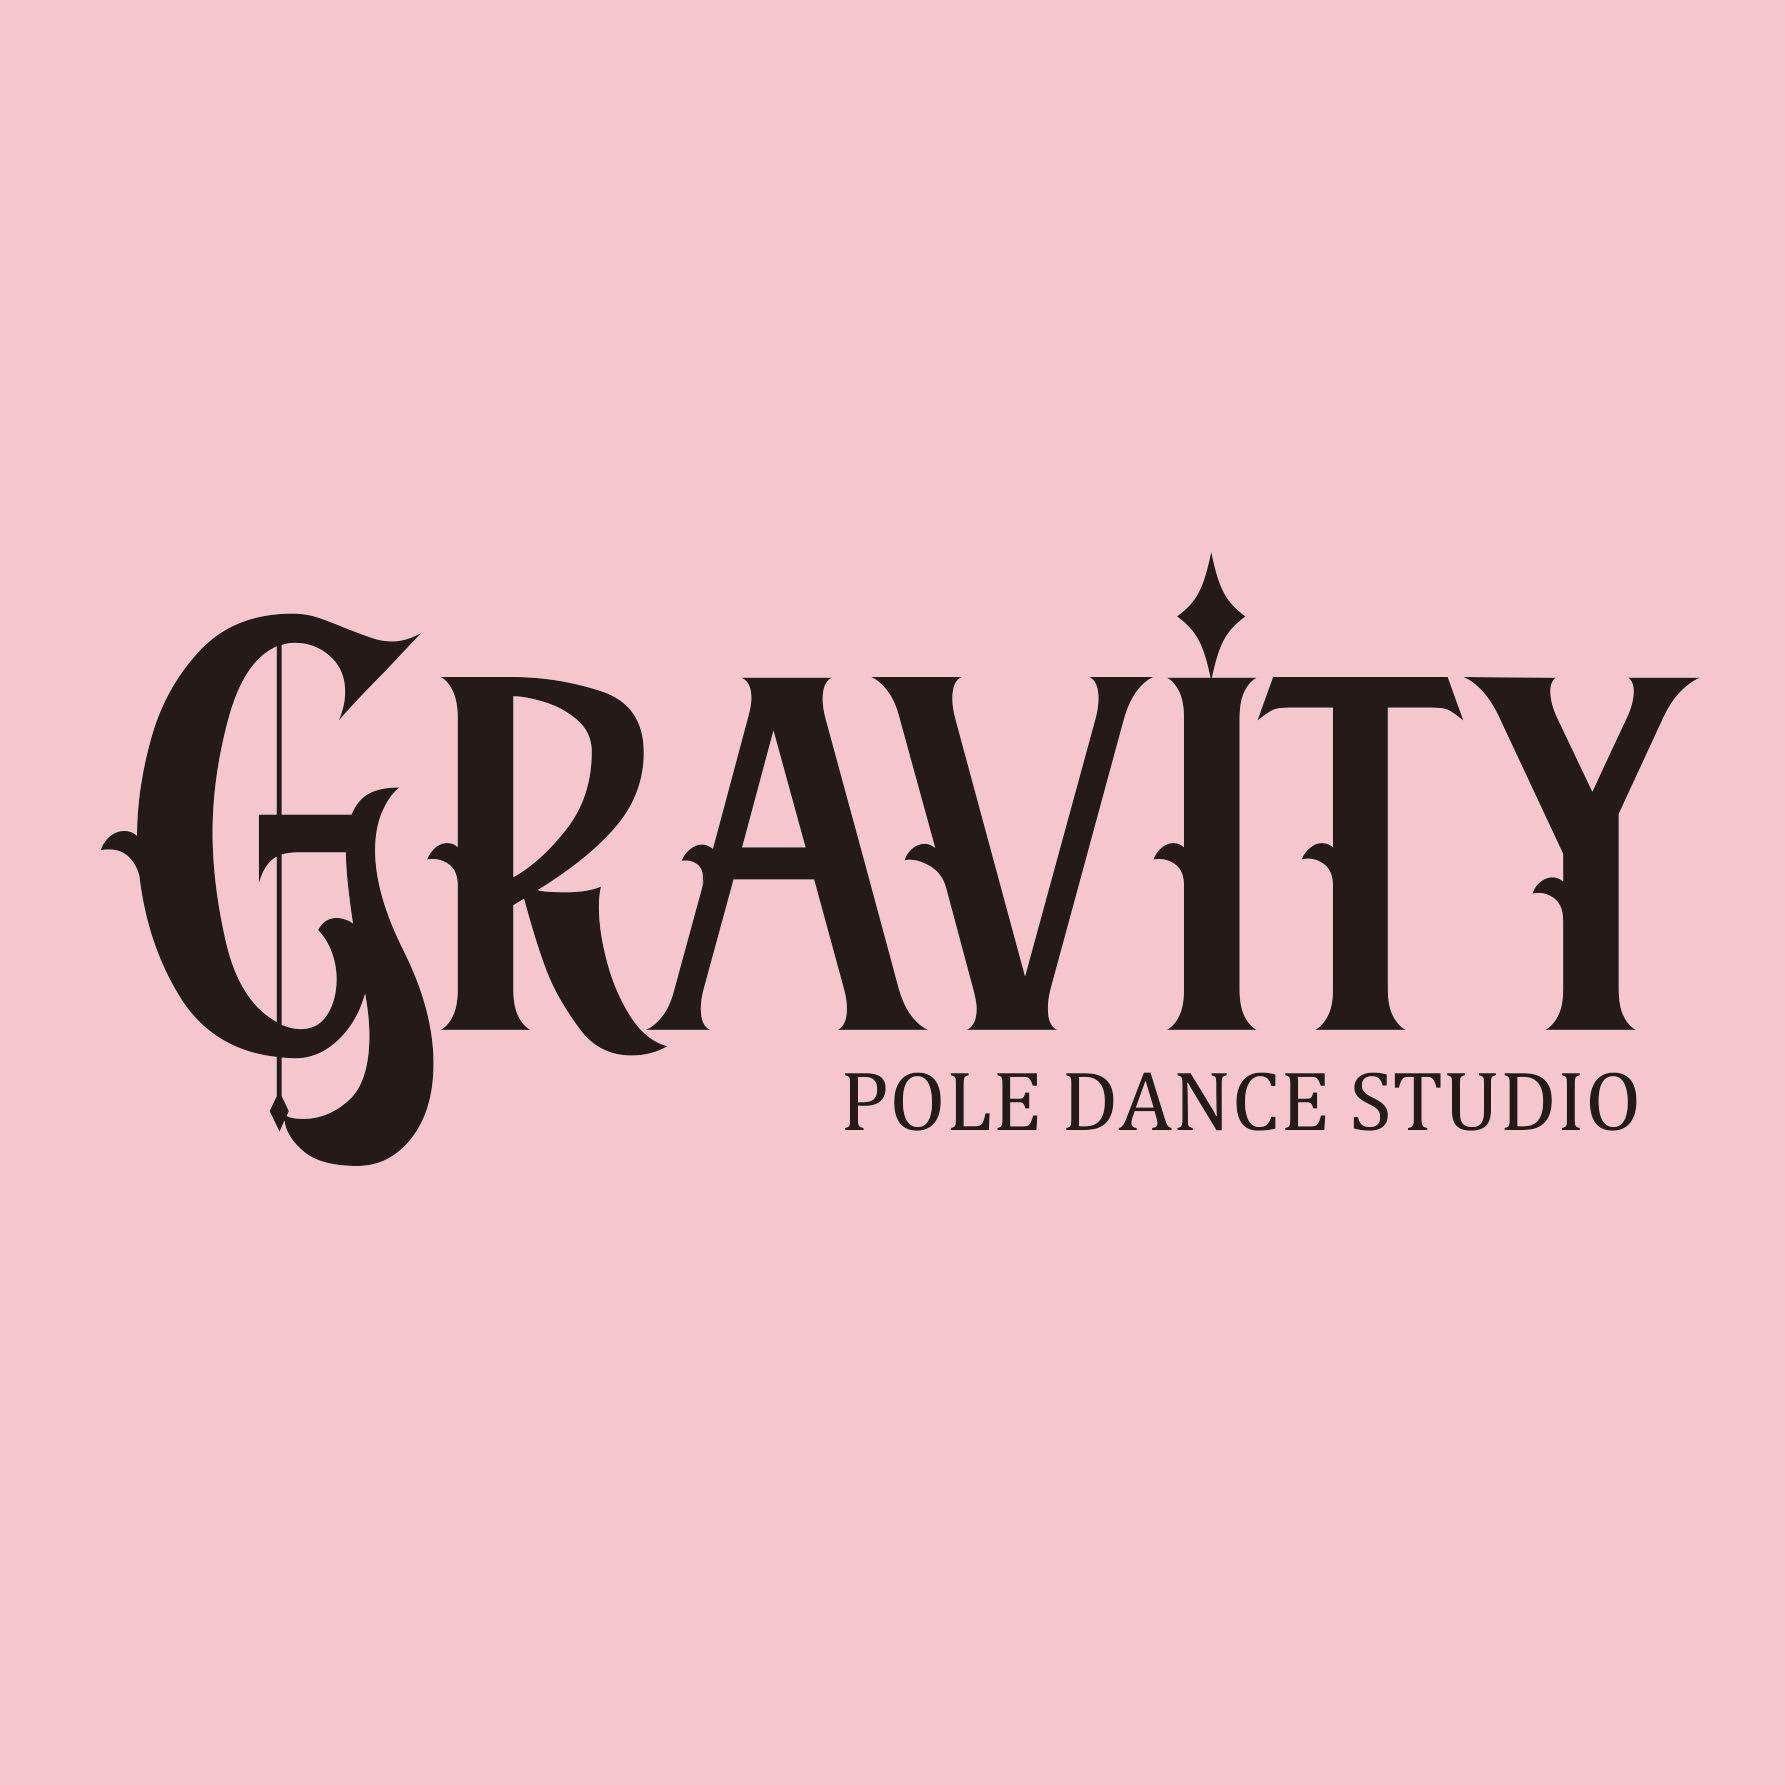 GRAVITY POLE DANCE STUDIO